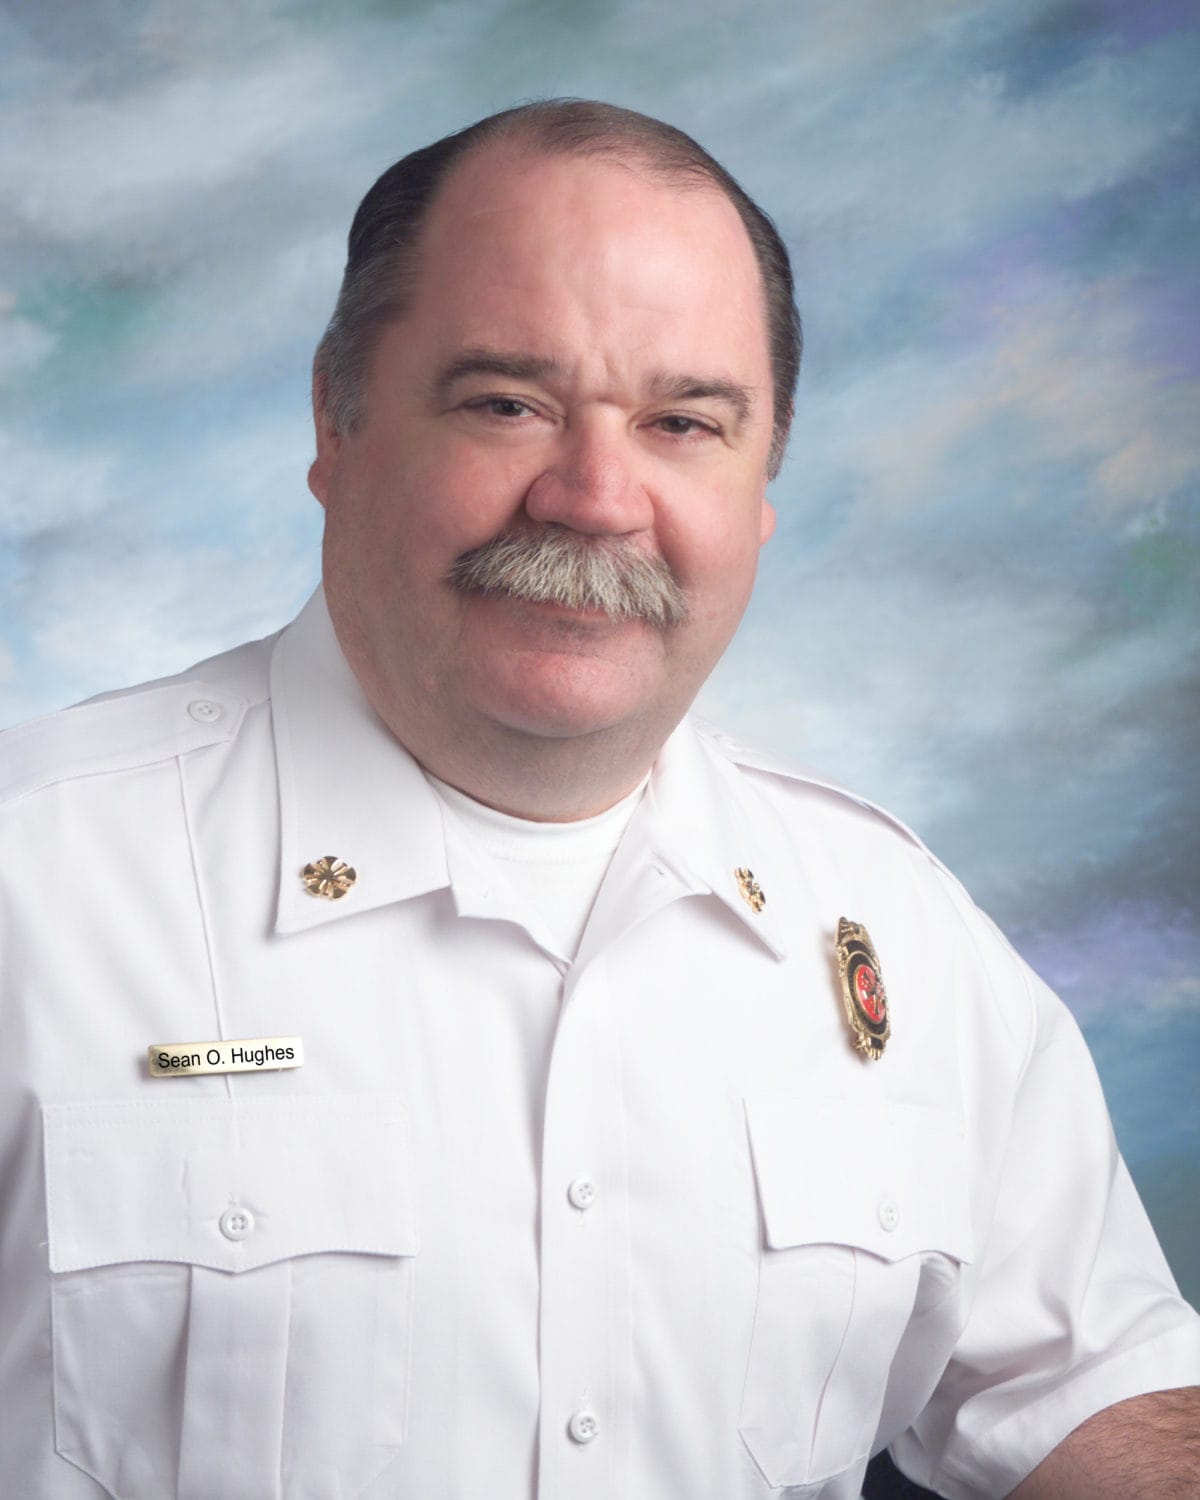 Hutchins Fire Chief